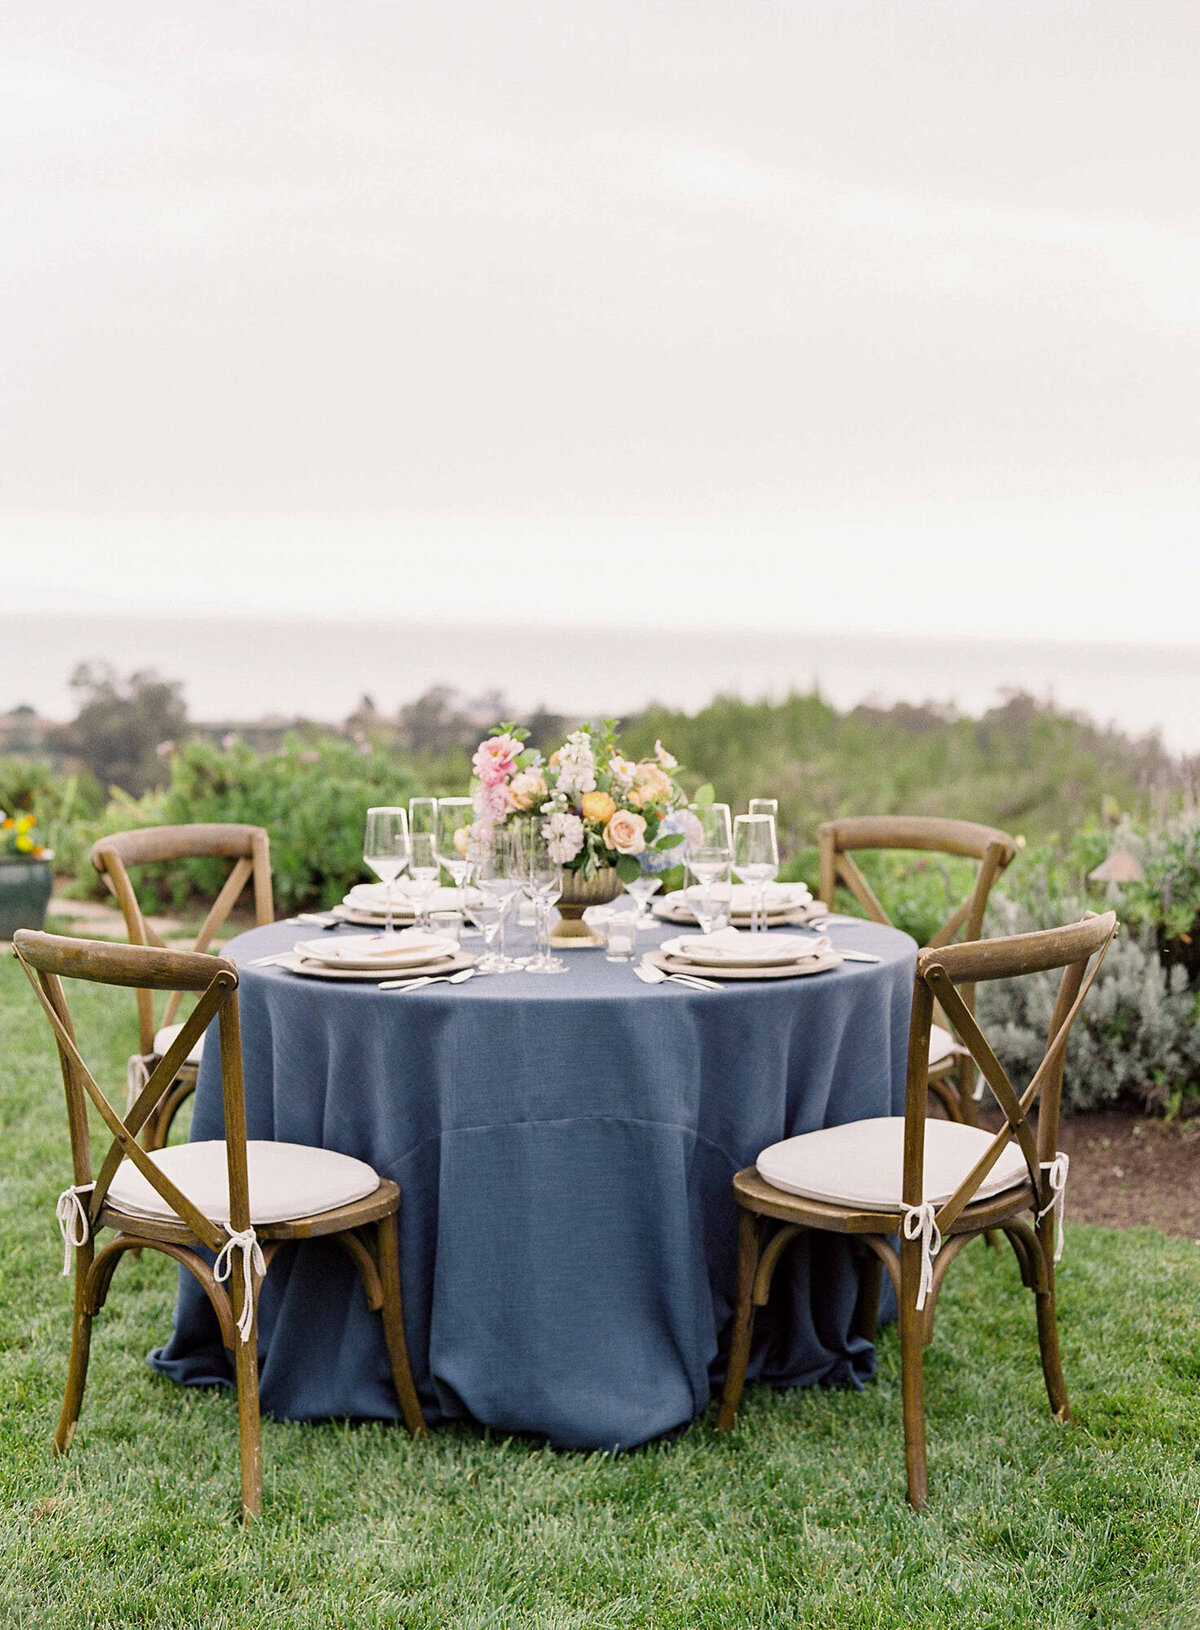 20santa-barbara-estate-wedding-planner-wood-x-back-chairs-ocean-front-reception-table